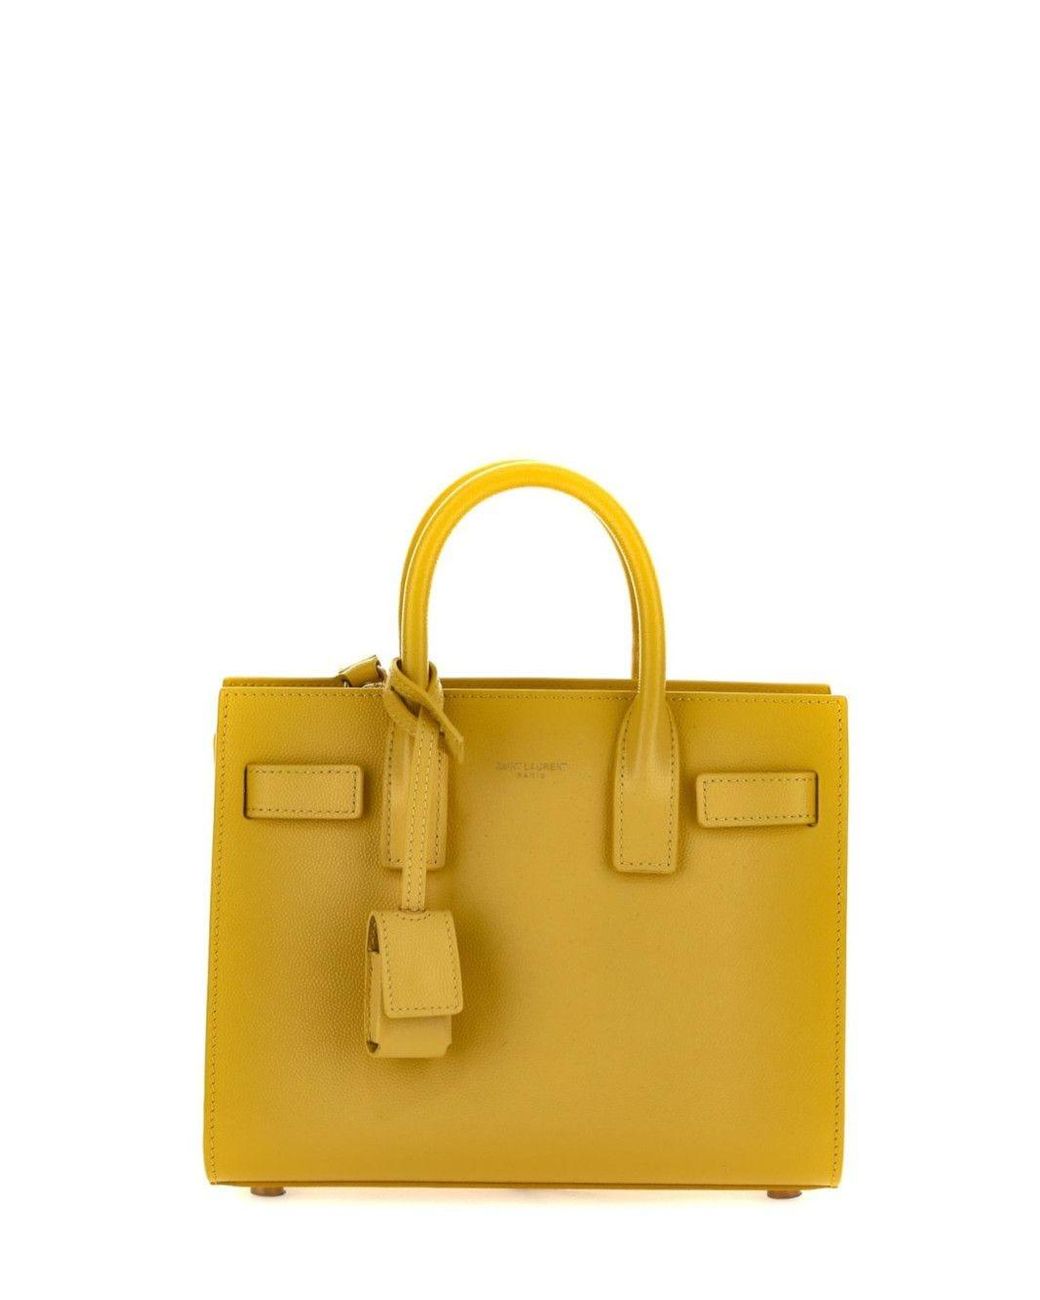 Saint Laurent Yellow Sac De Jour Nano Bag In Grained Leather